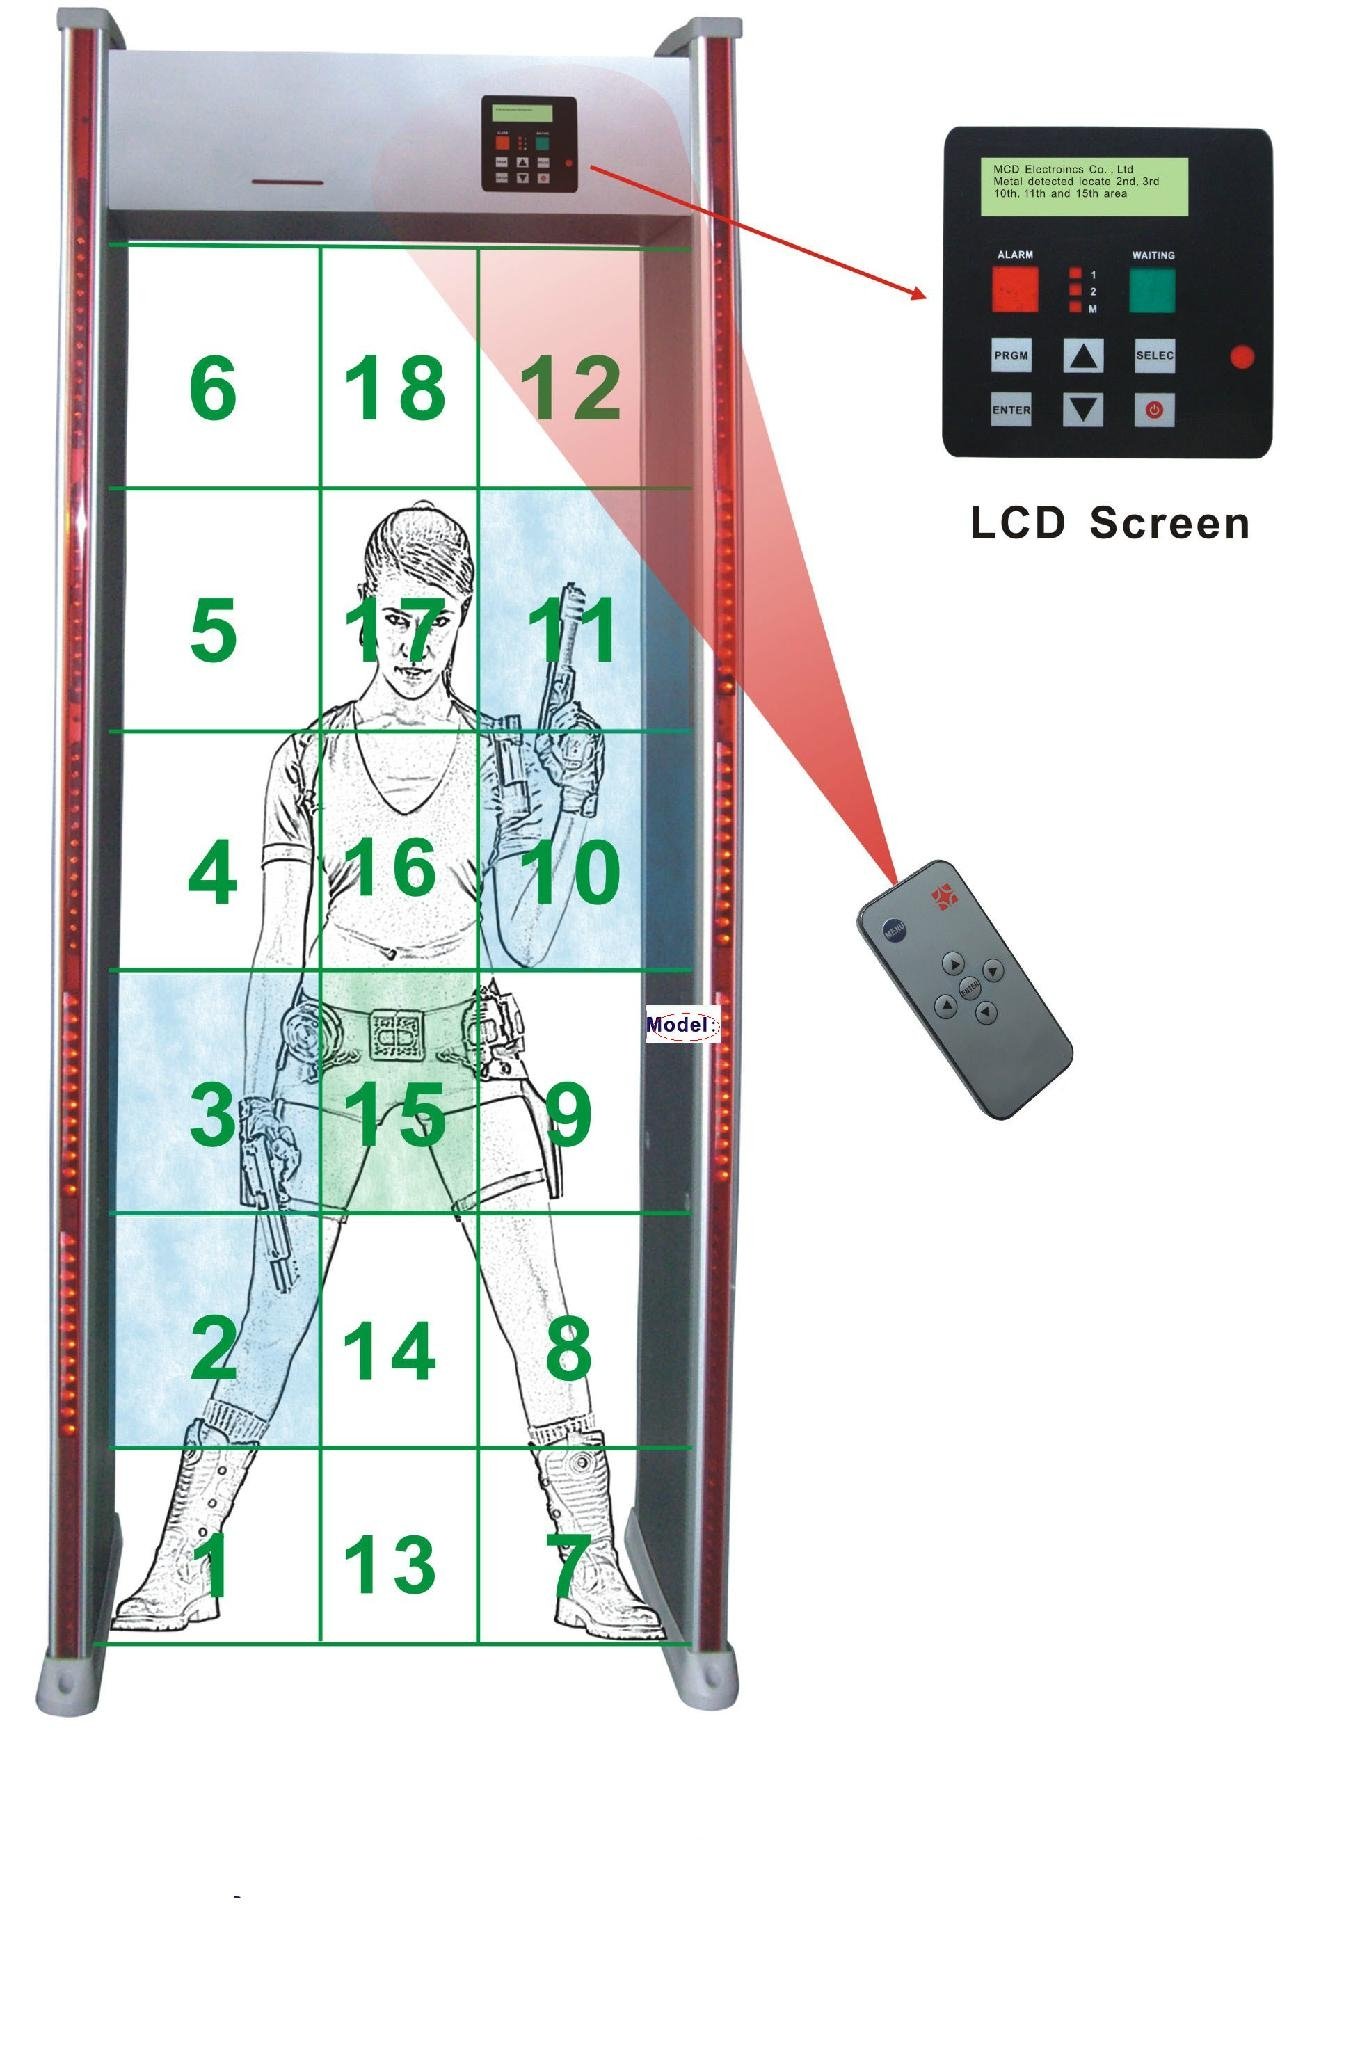 Digital Door Frame walkthrough metal detector price of LCD Screen 2